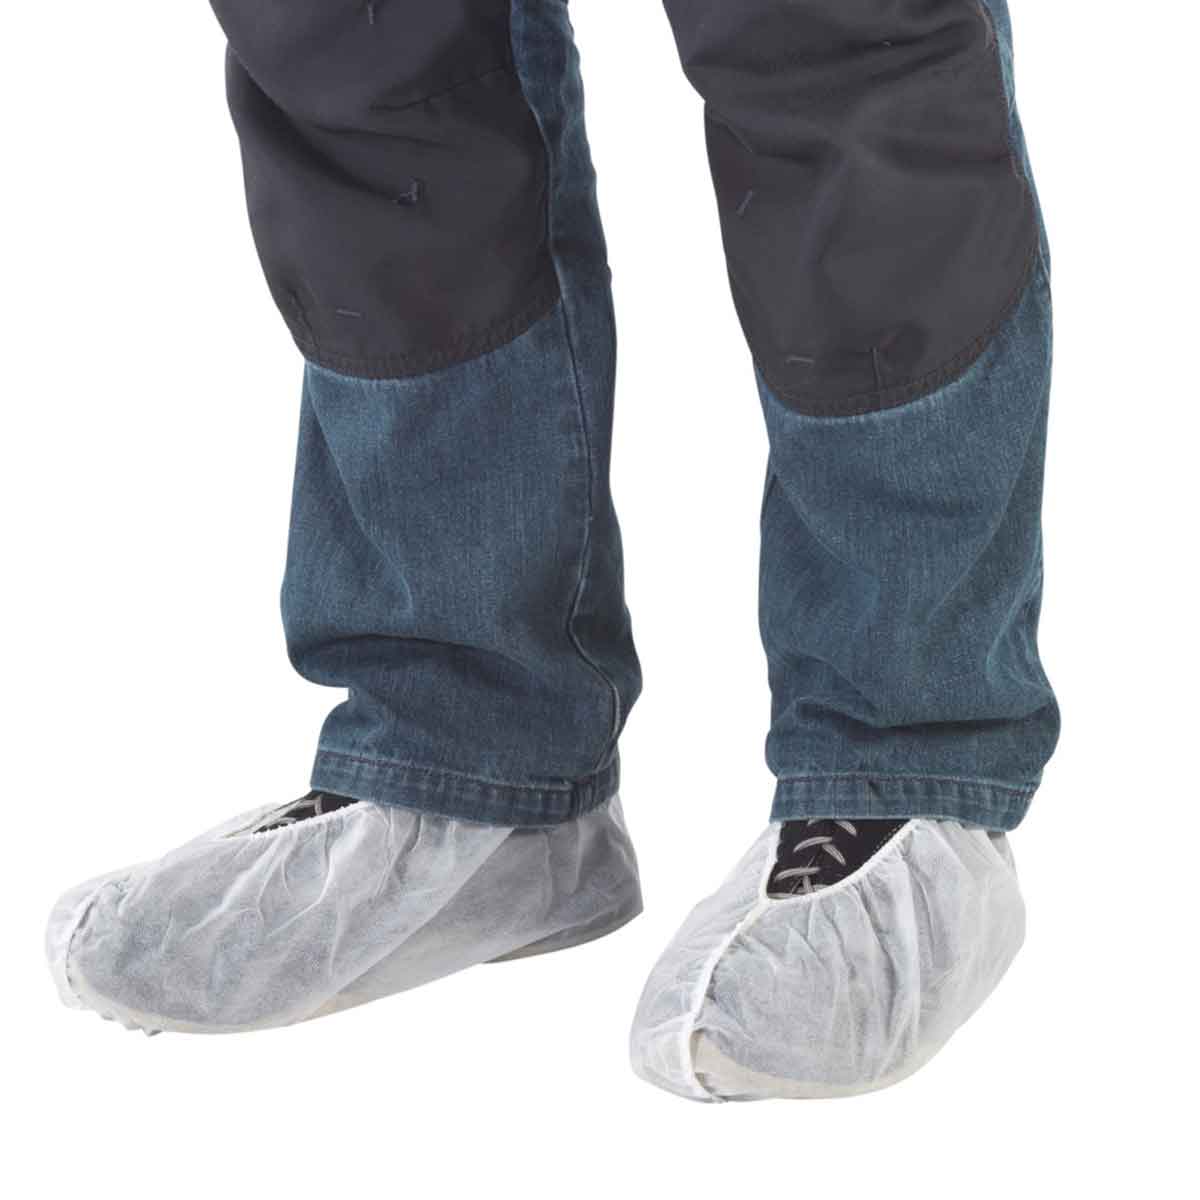 Protecta Foot Par Fundas protectoras calzado